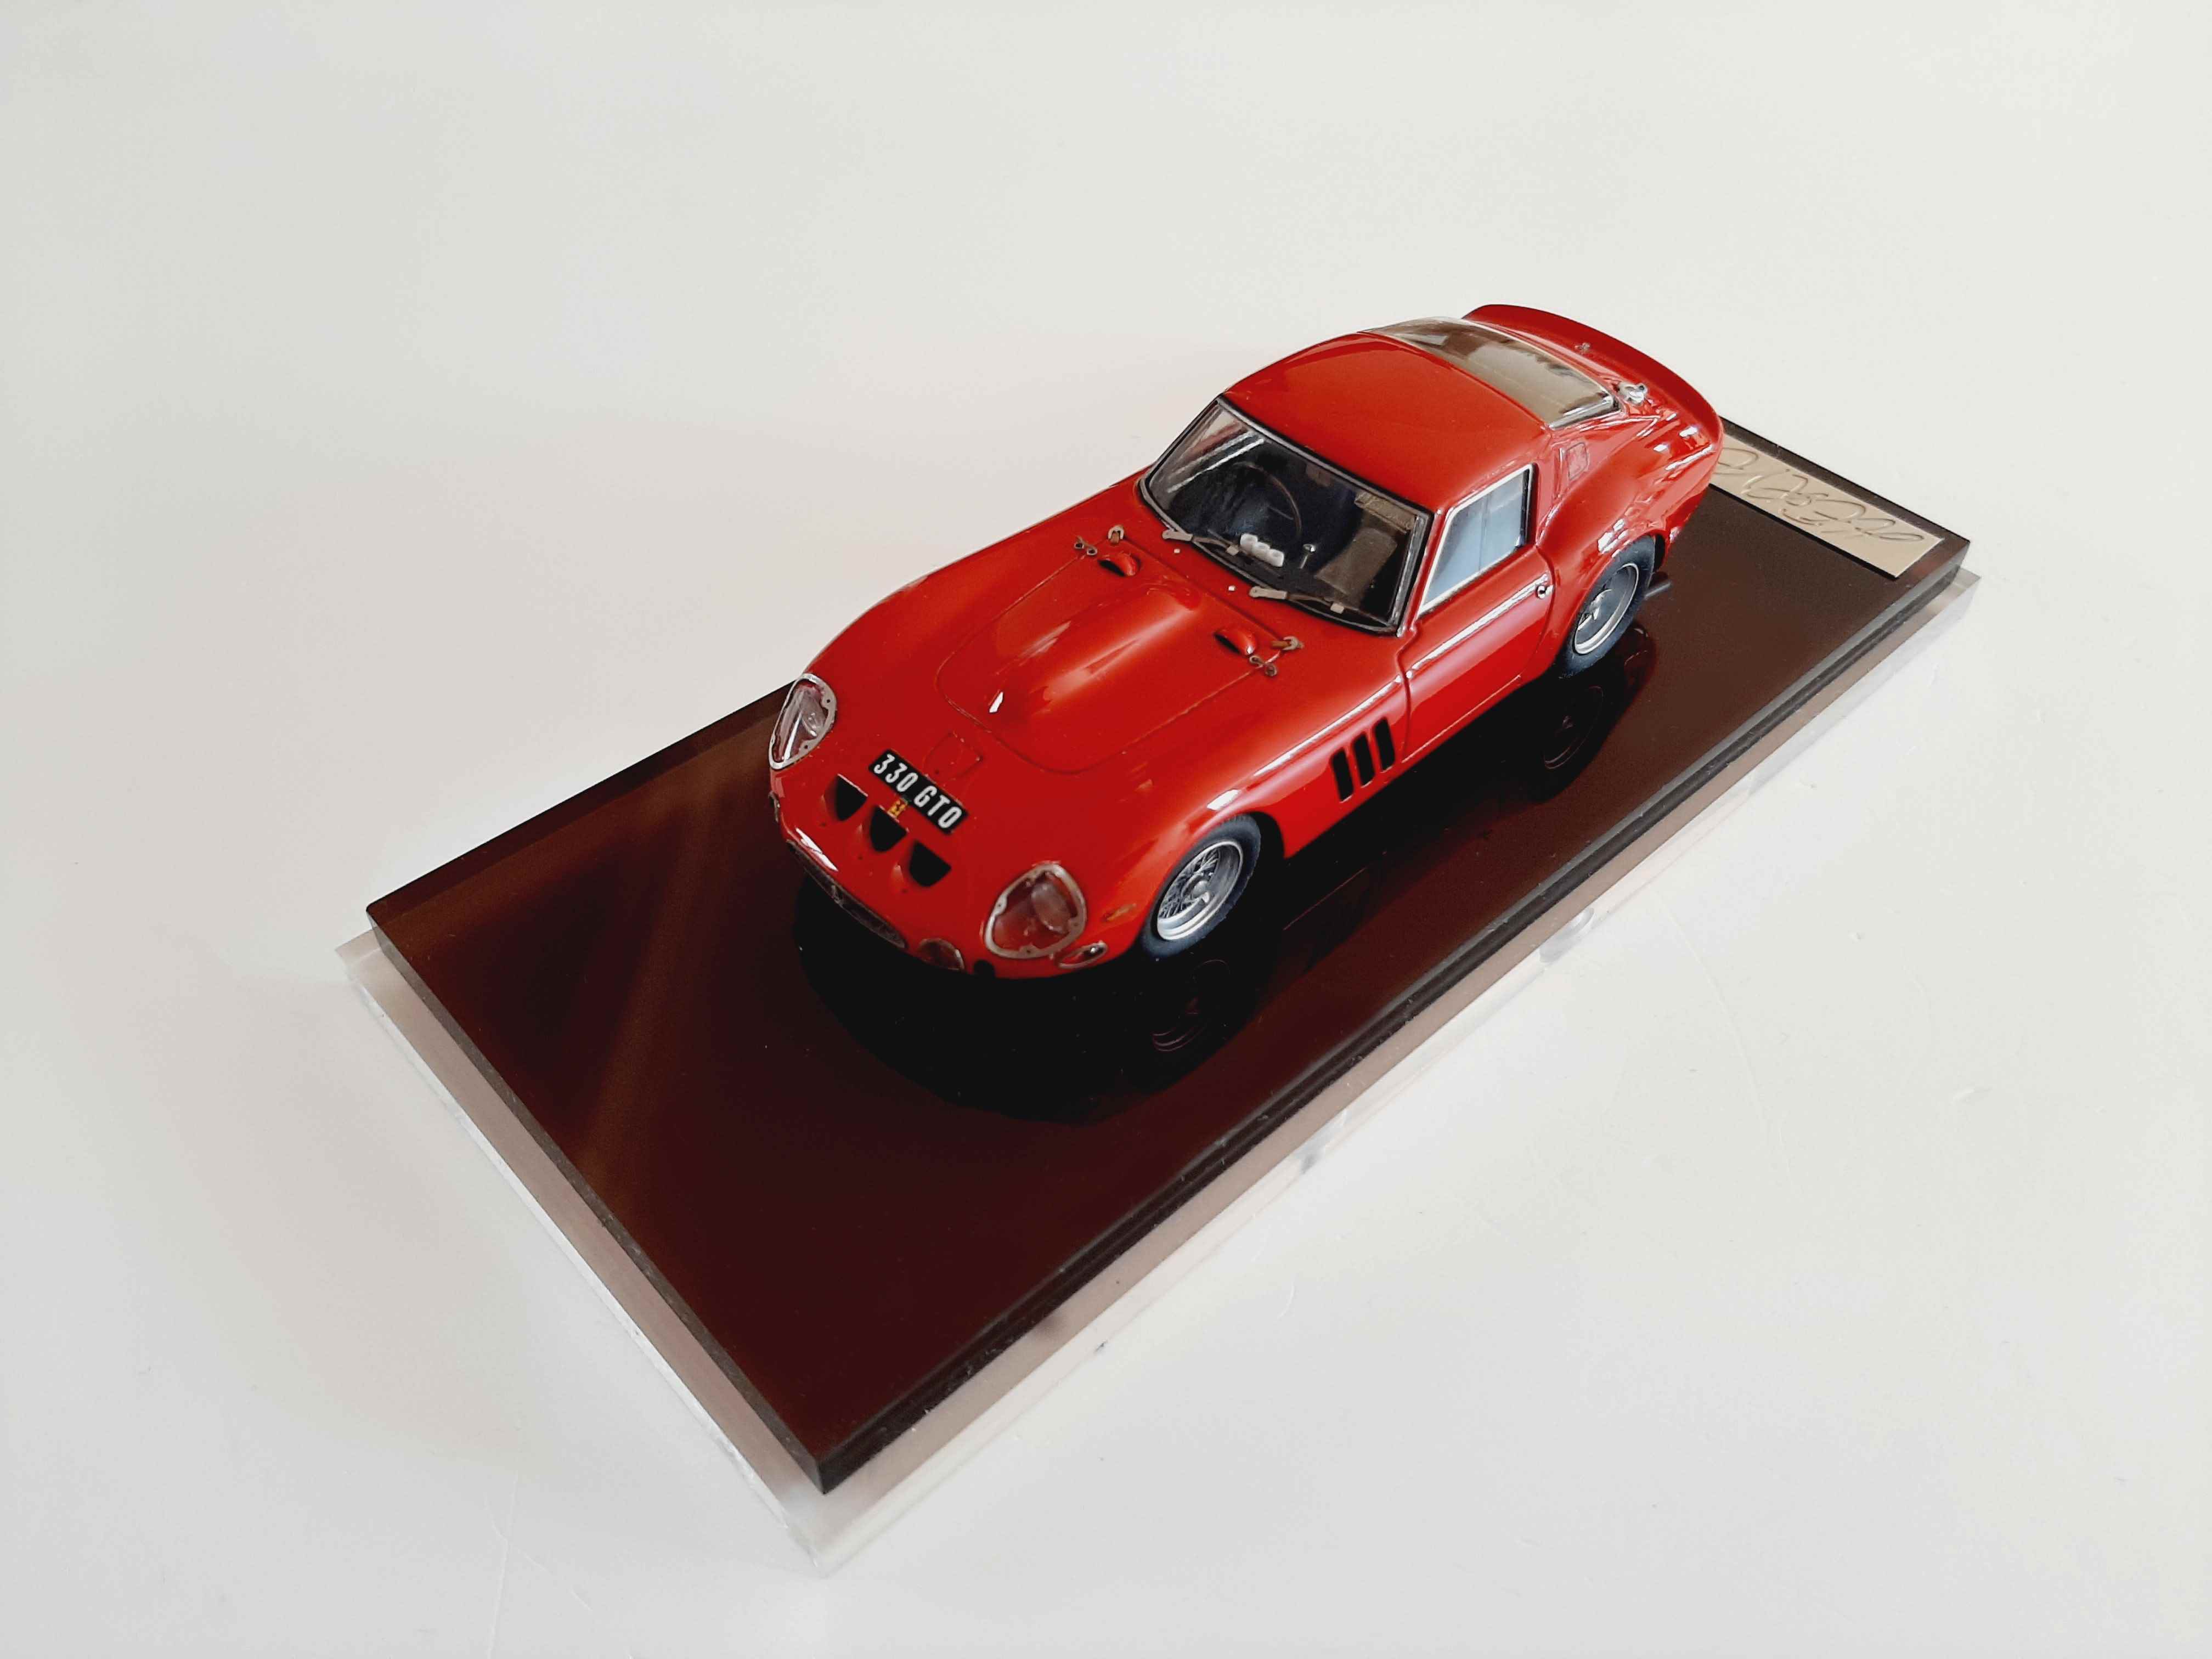 H. Duband : Ferrari 330 GTO #4561 MP.Cavallier --> RESERVED